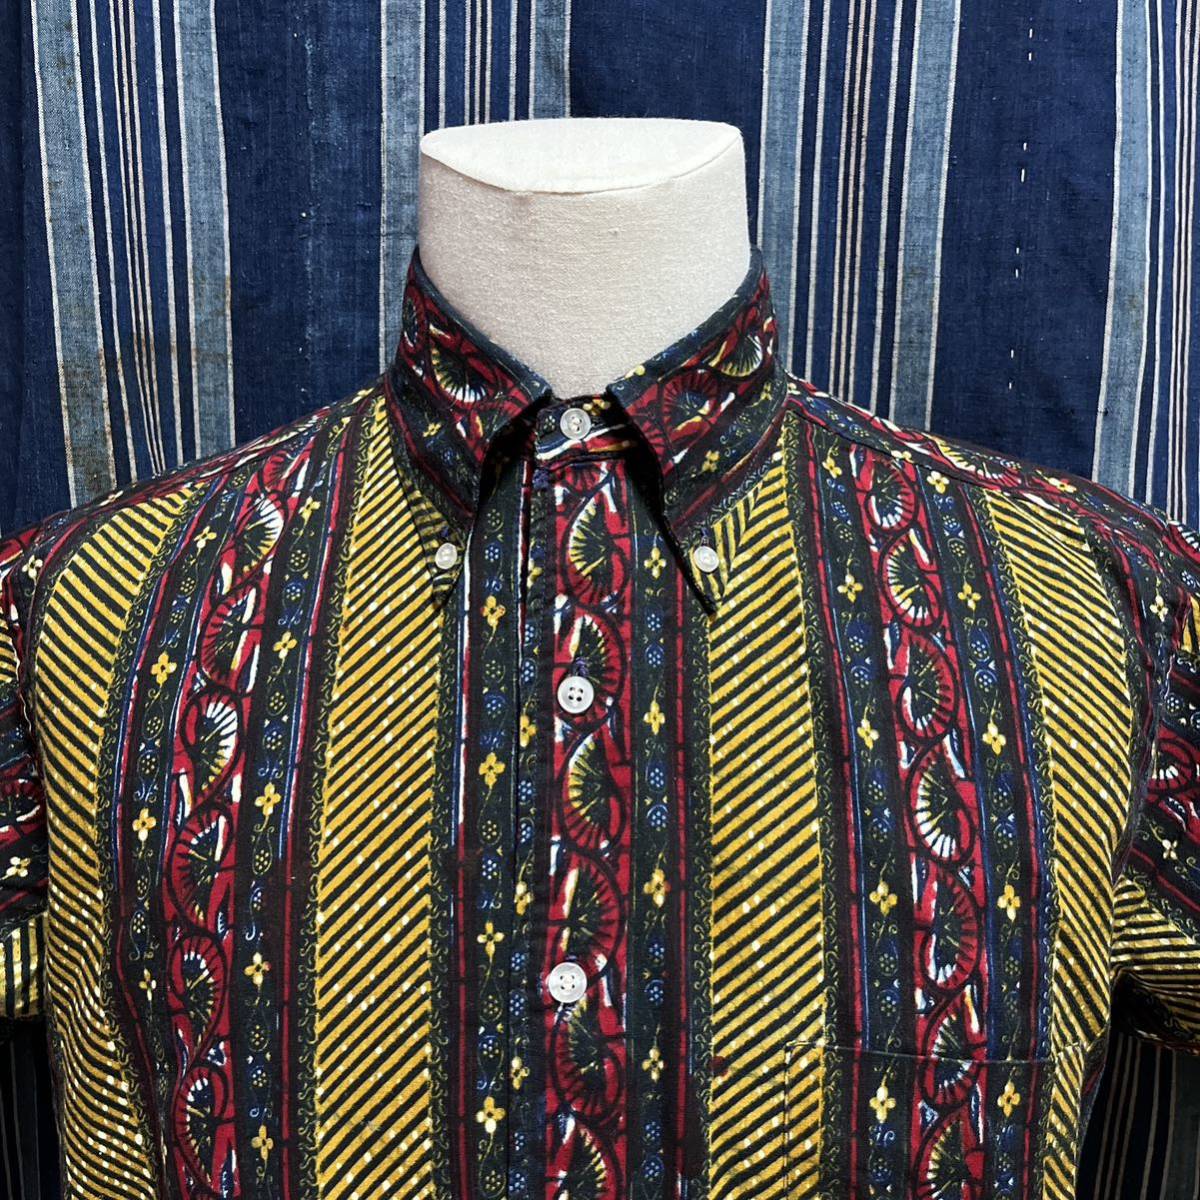 60s donegal batik prints 60年代 ドネガル バティック シャツ アフリカンバティック エスニック 民族柄  総柄 ボタンダウン